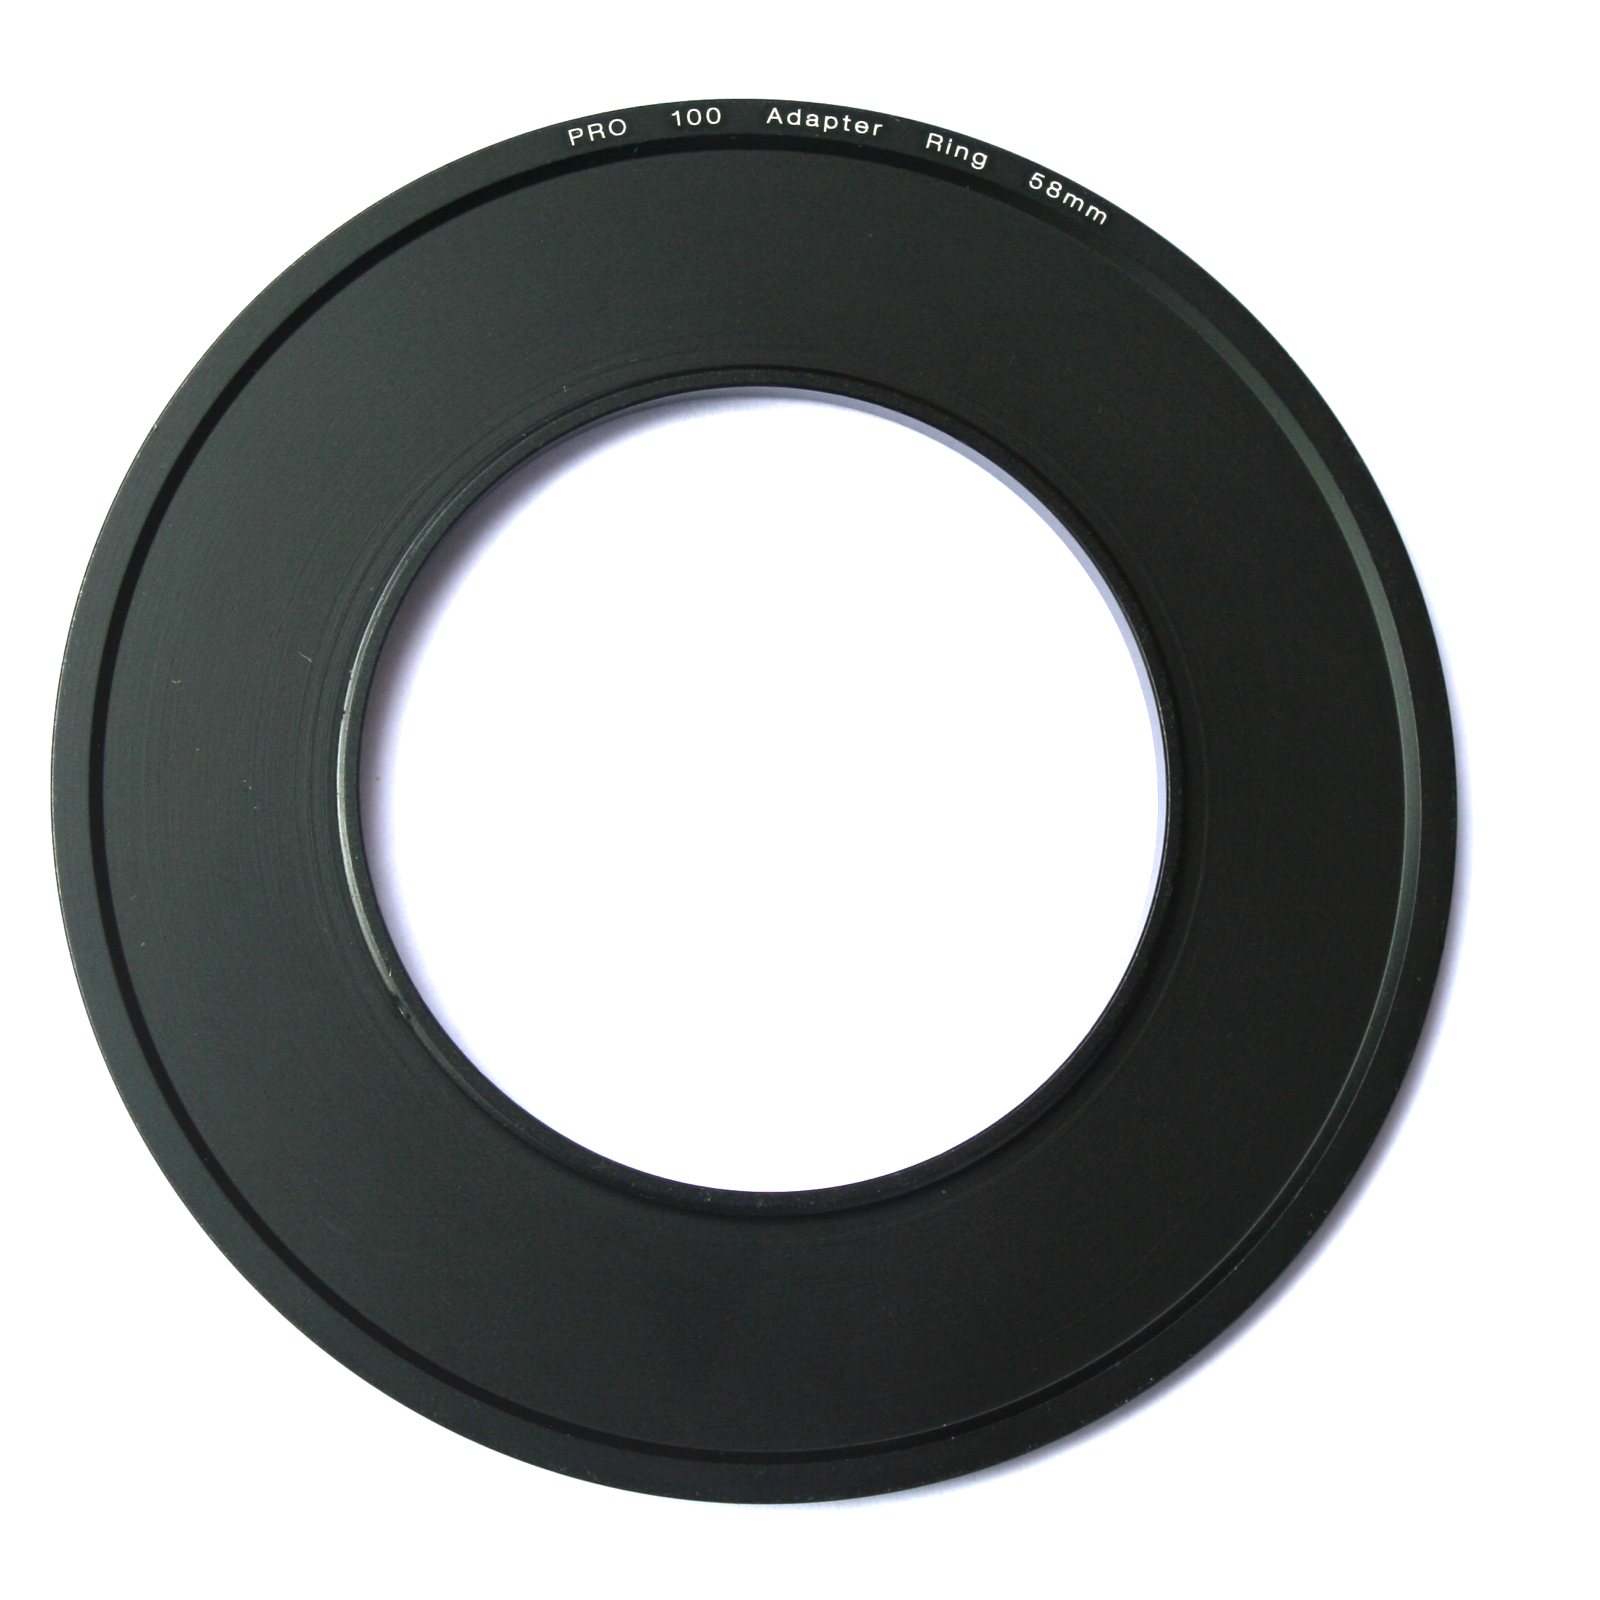 Tiffen PRO100 55mm adapter ring